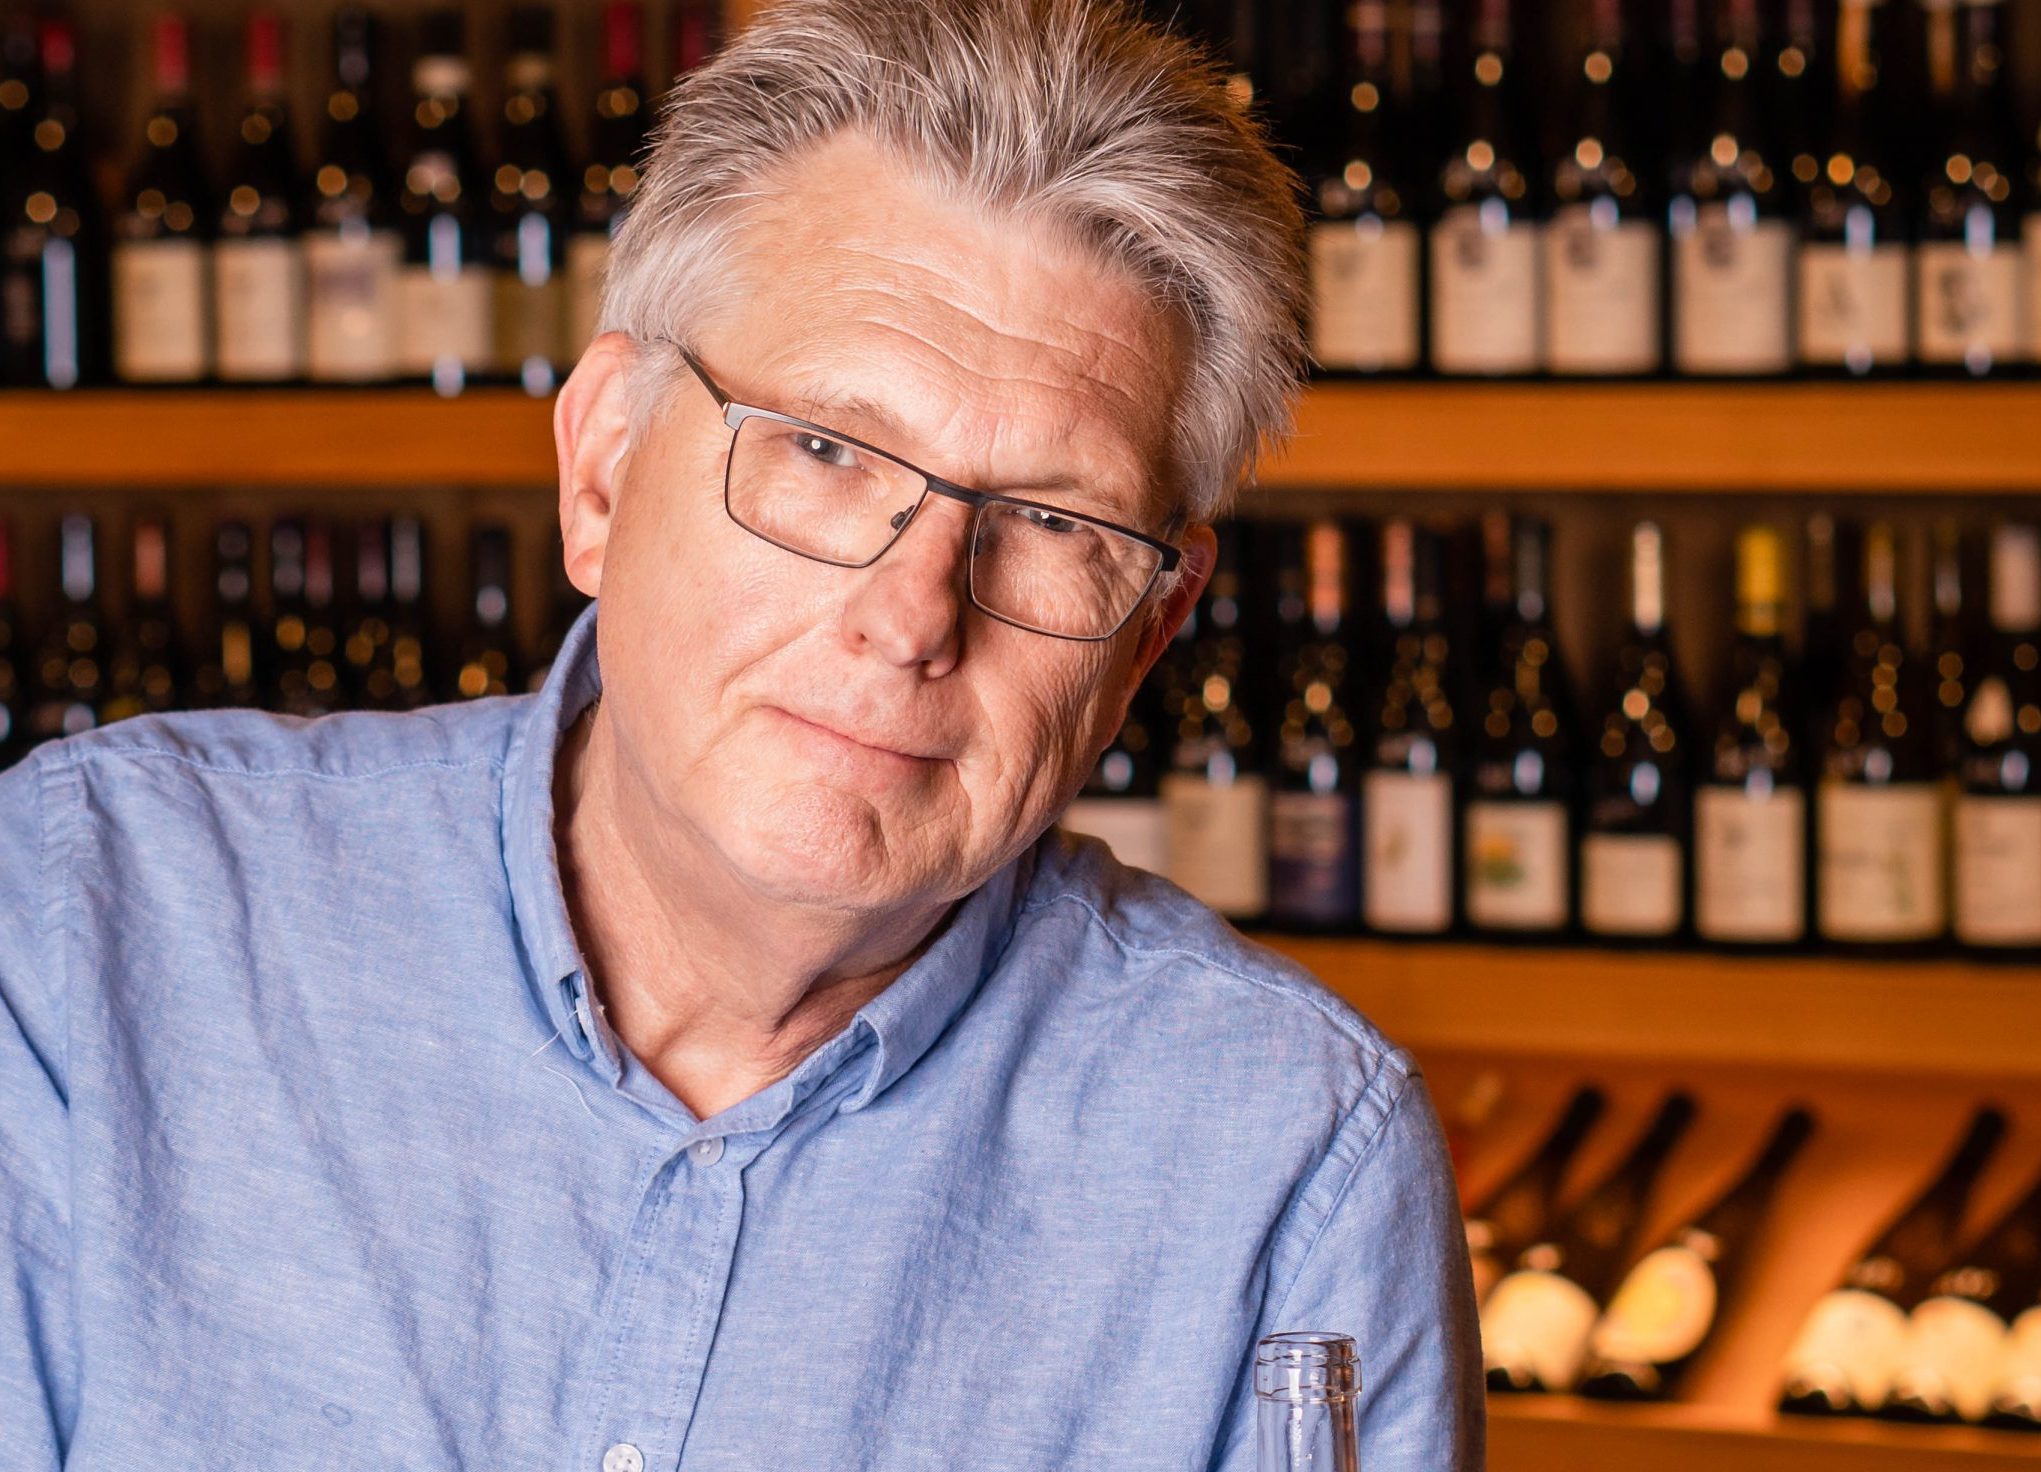 Jim Whitaker of the Ashland Wine Cellar